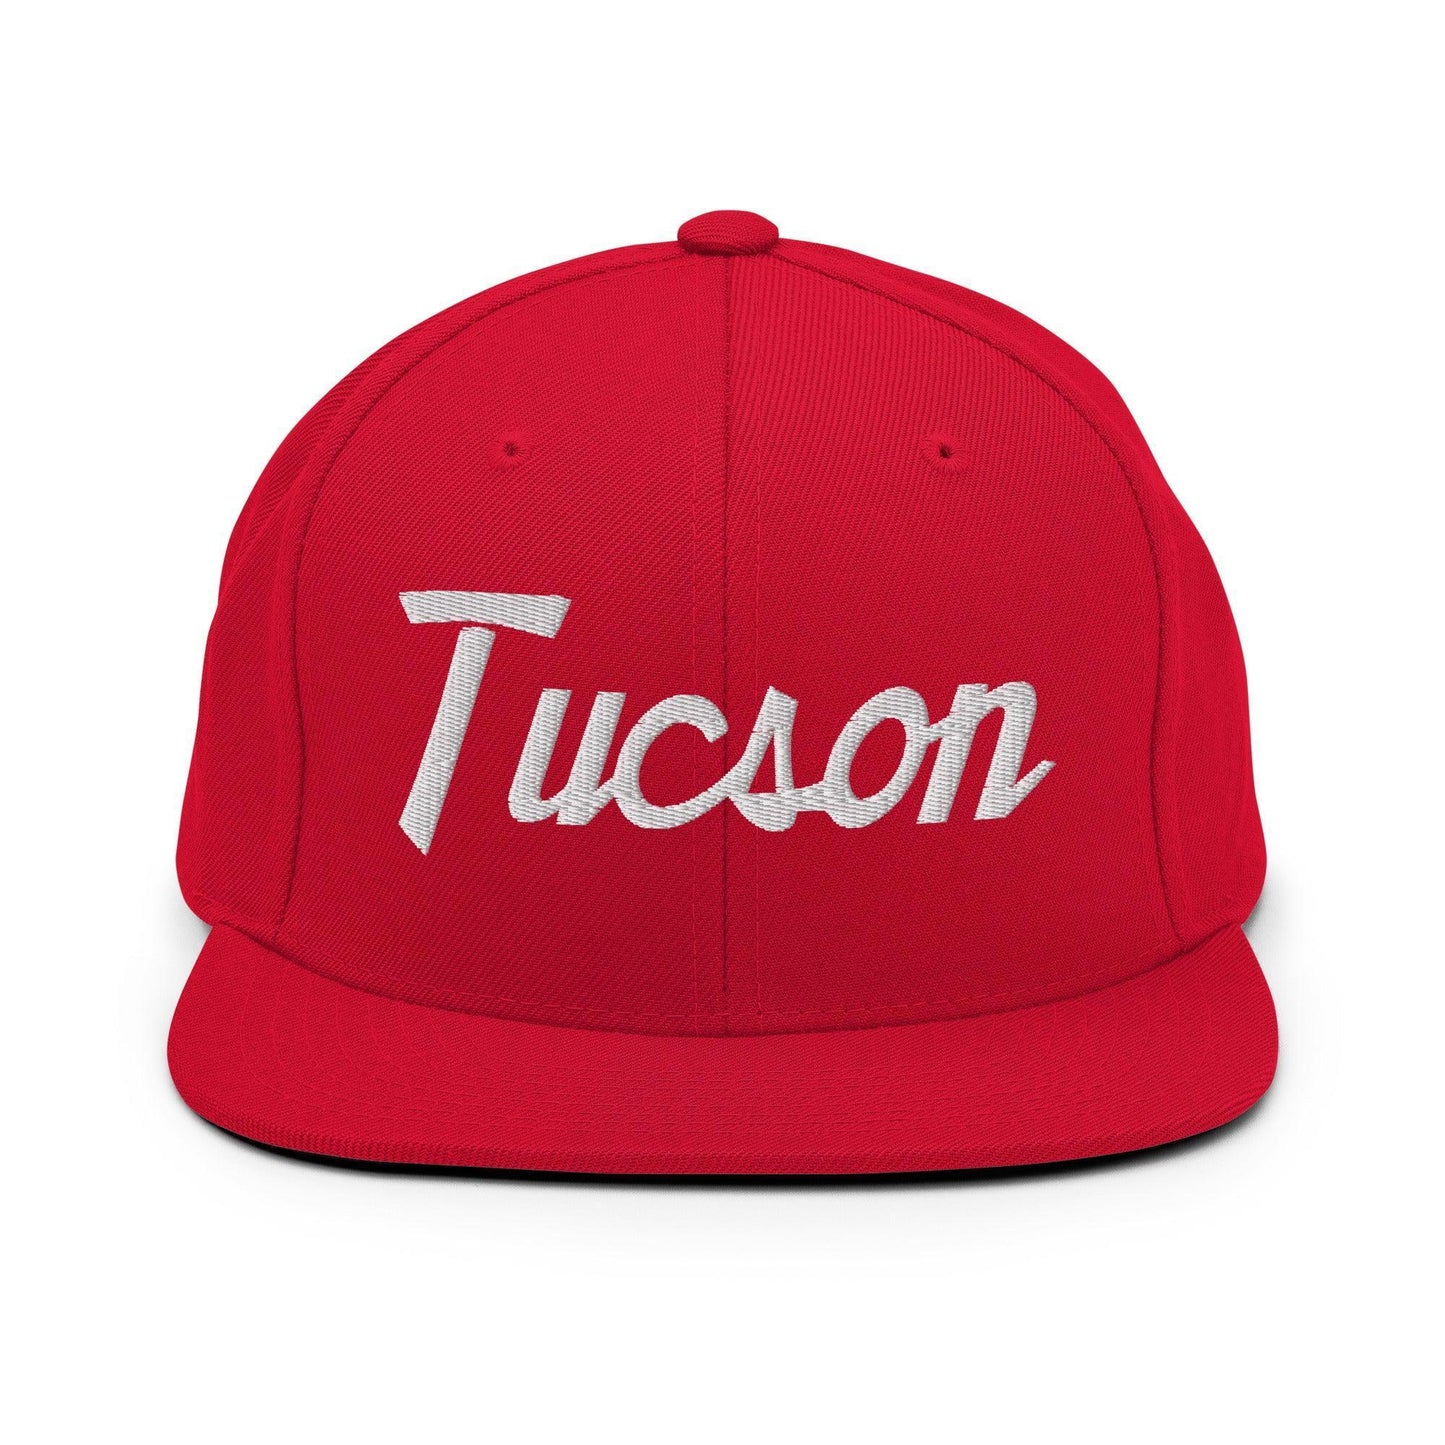 Tucson Script Snapback Hat Red